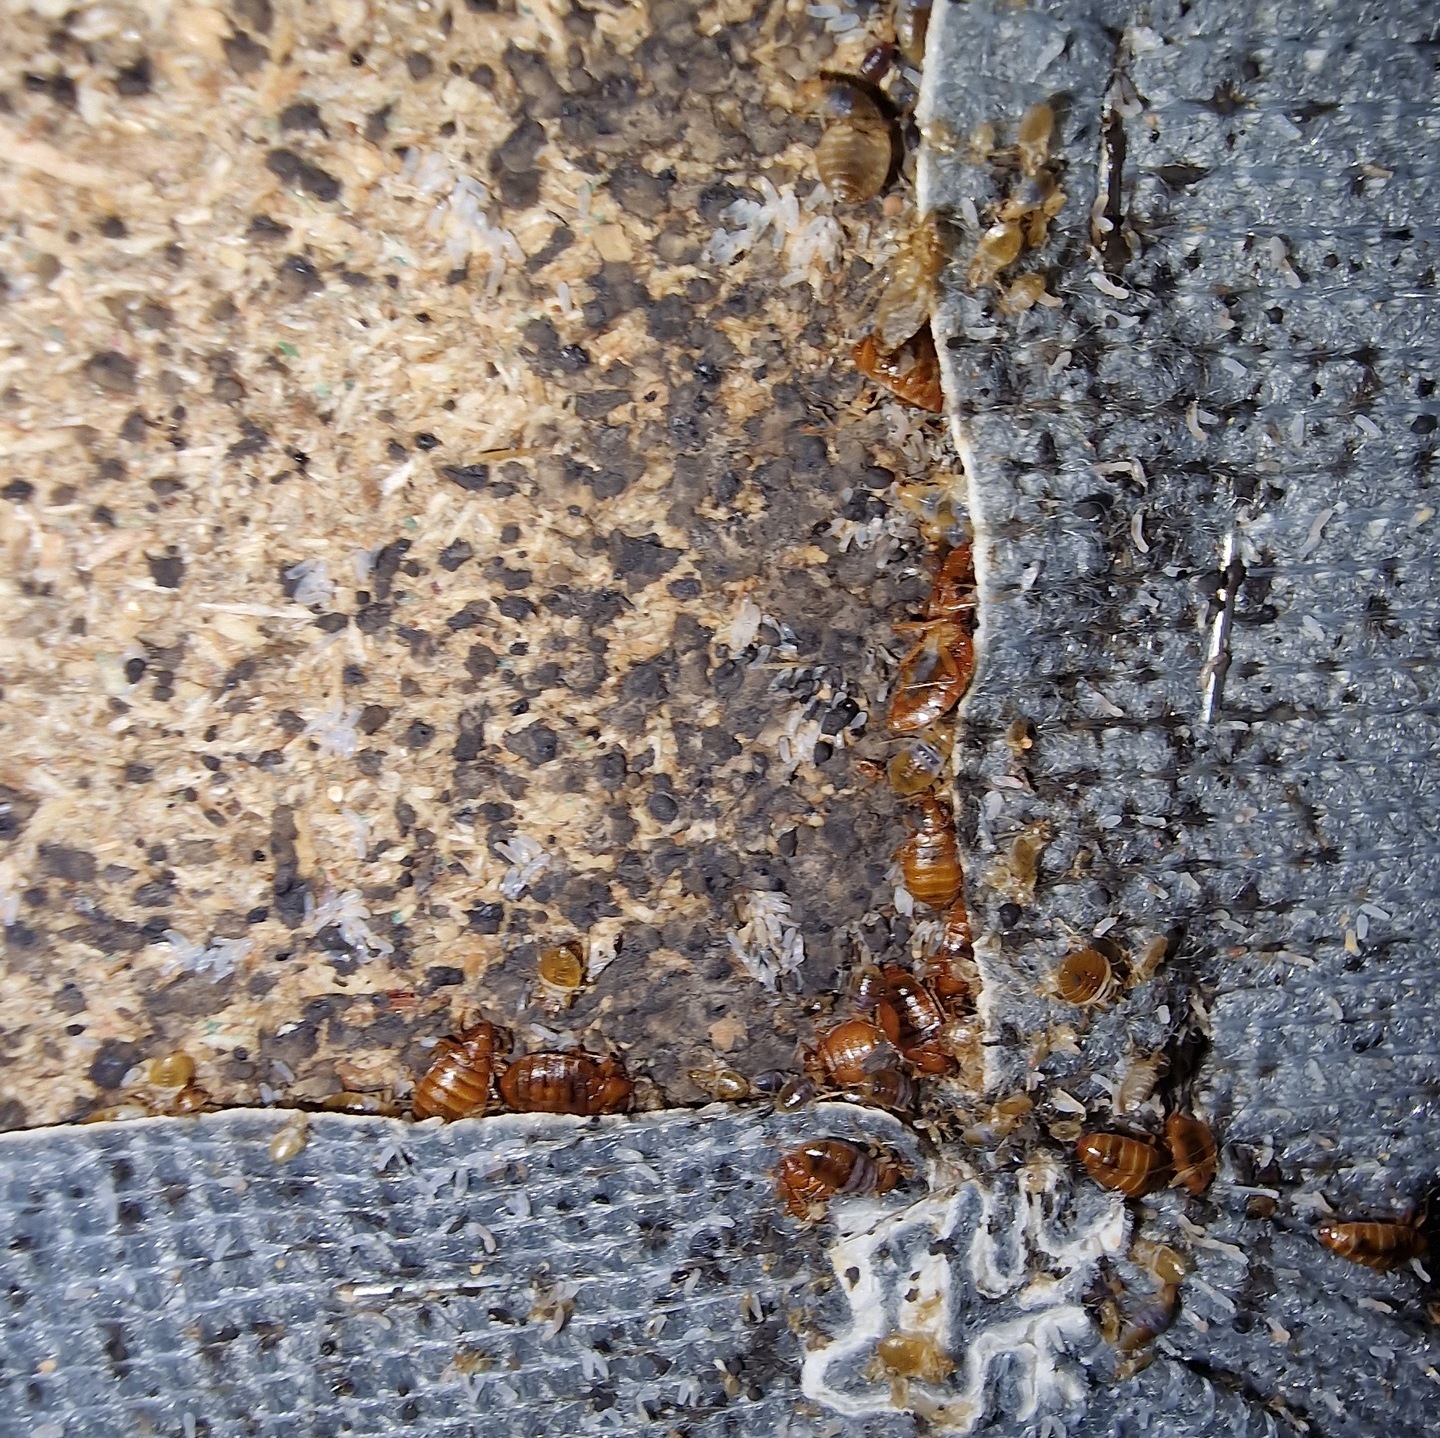 bed bugs on a headboard